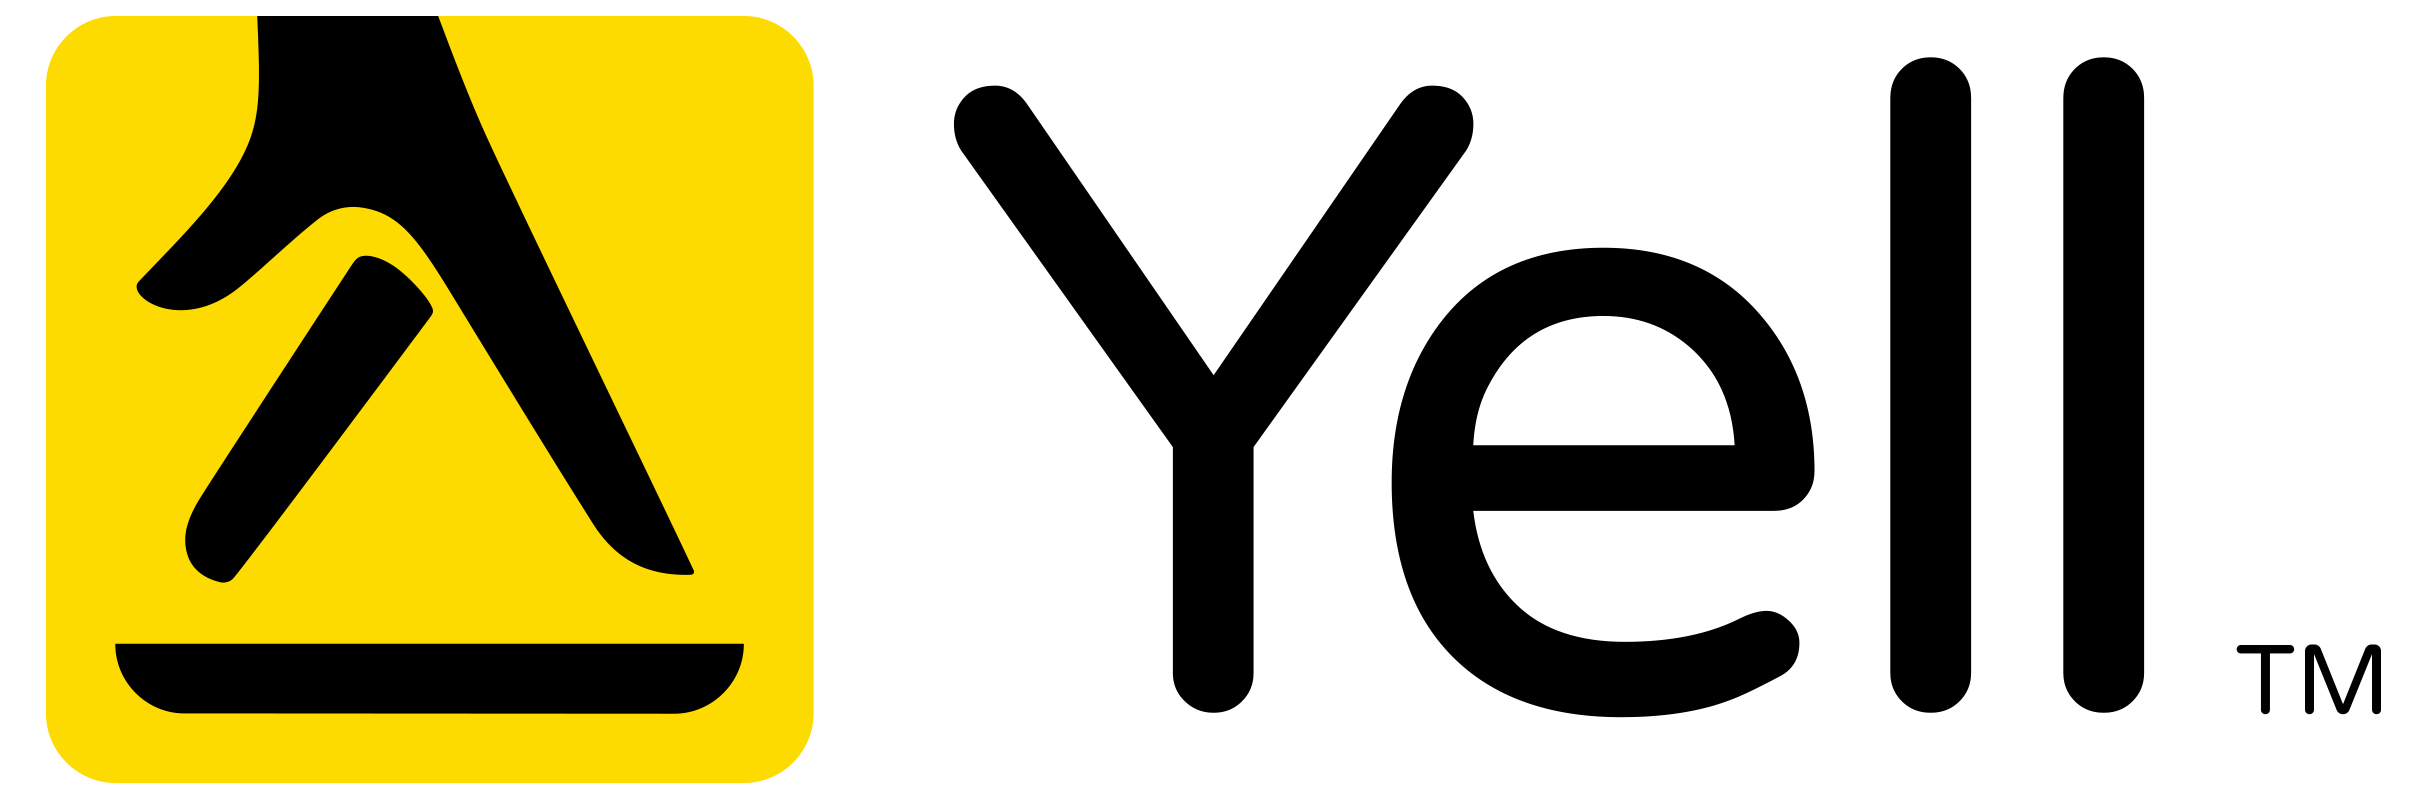 footer image of Yell logo